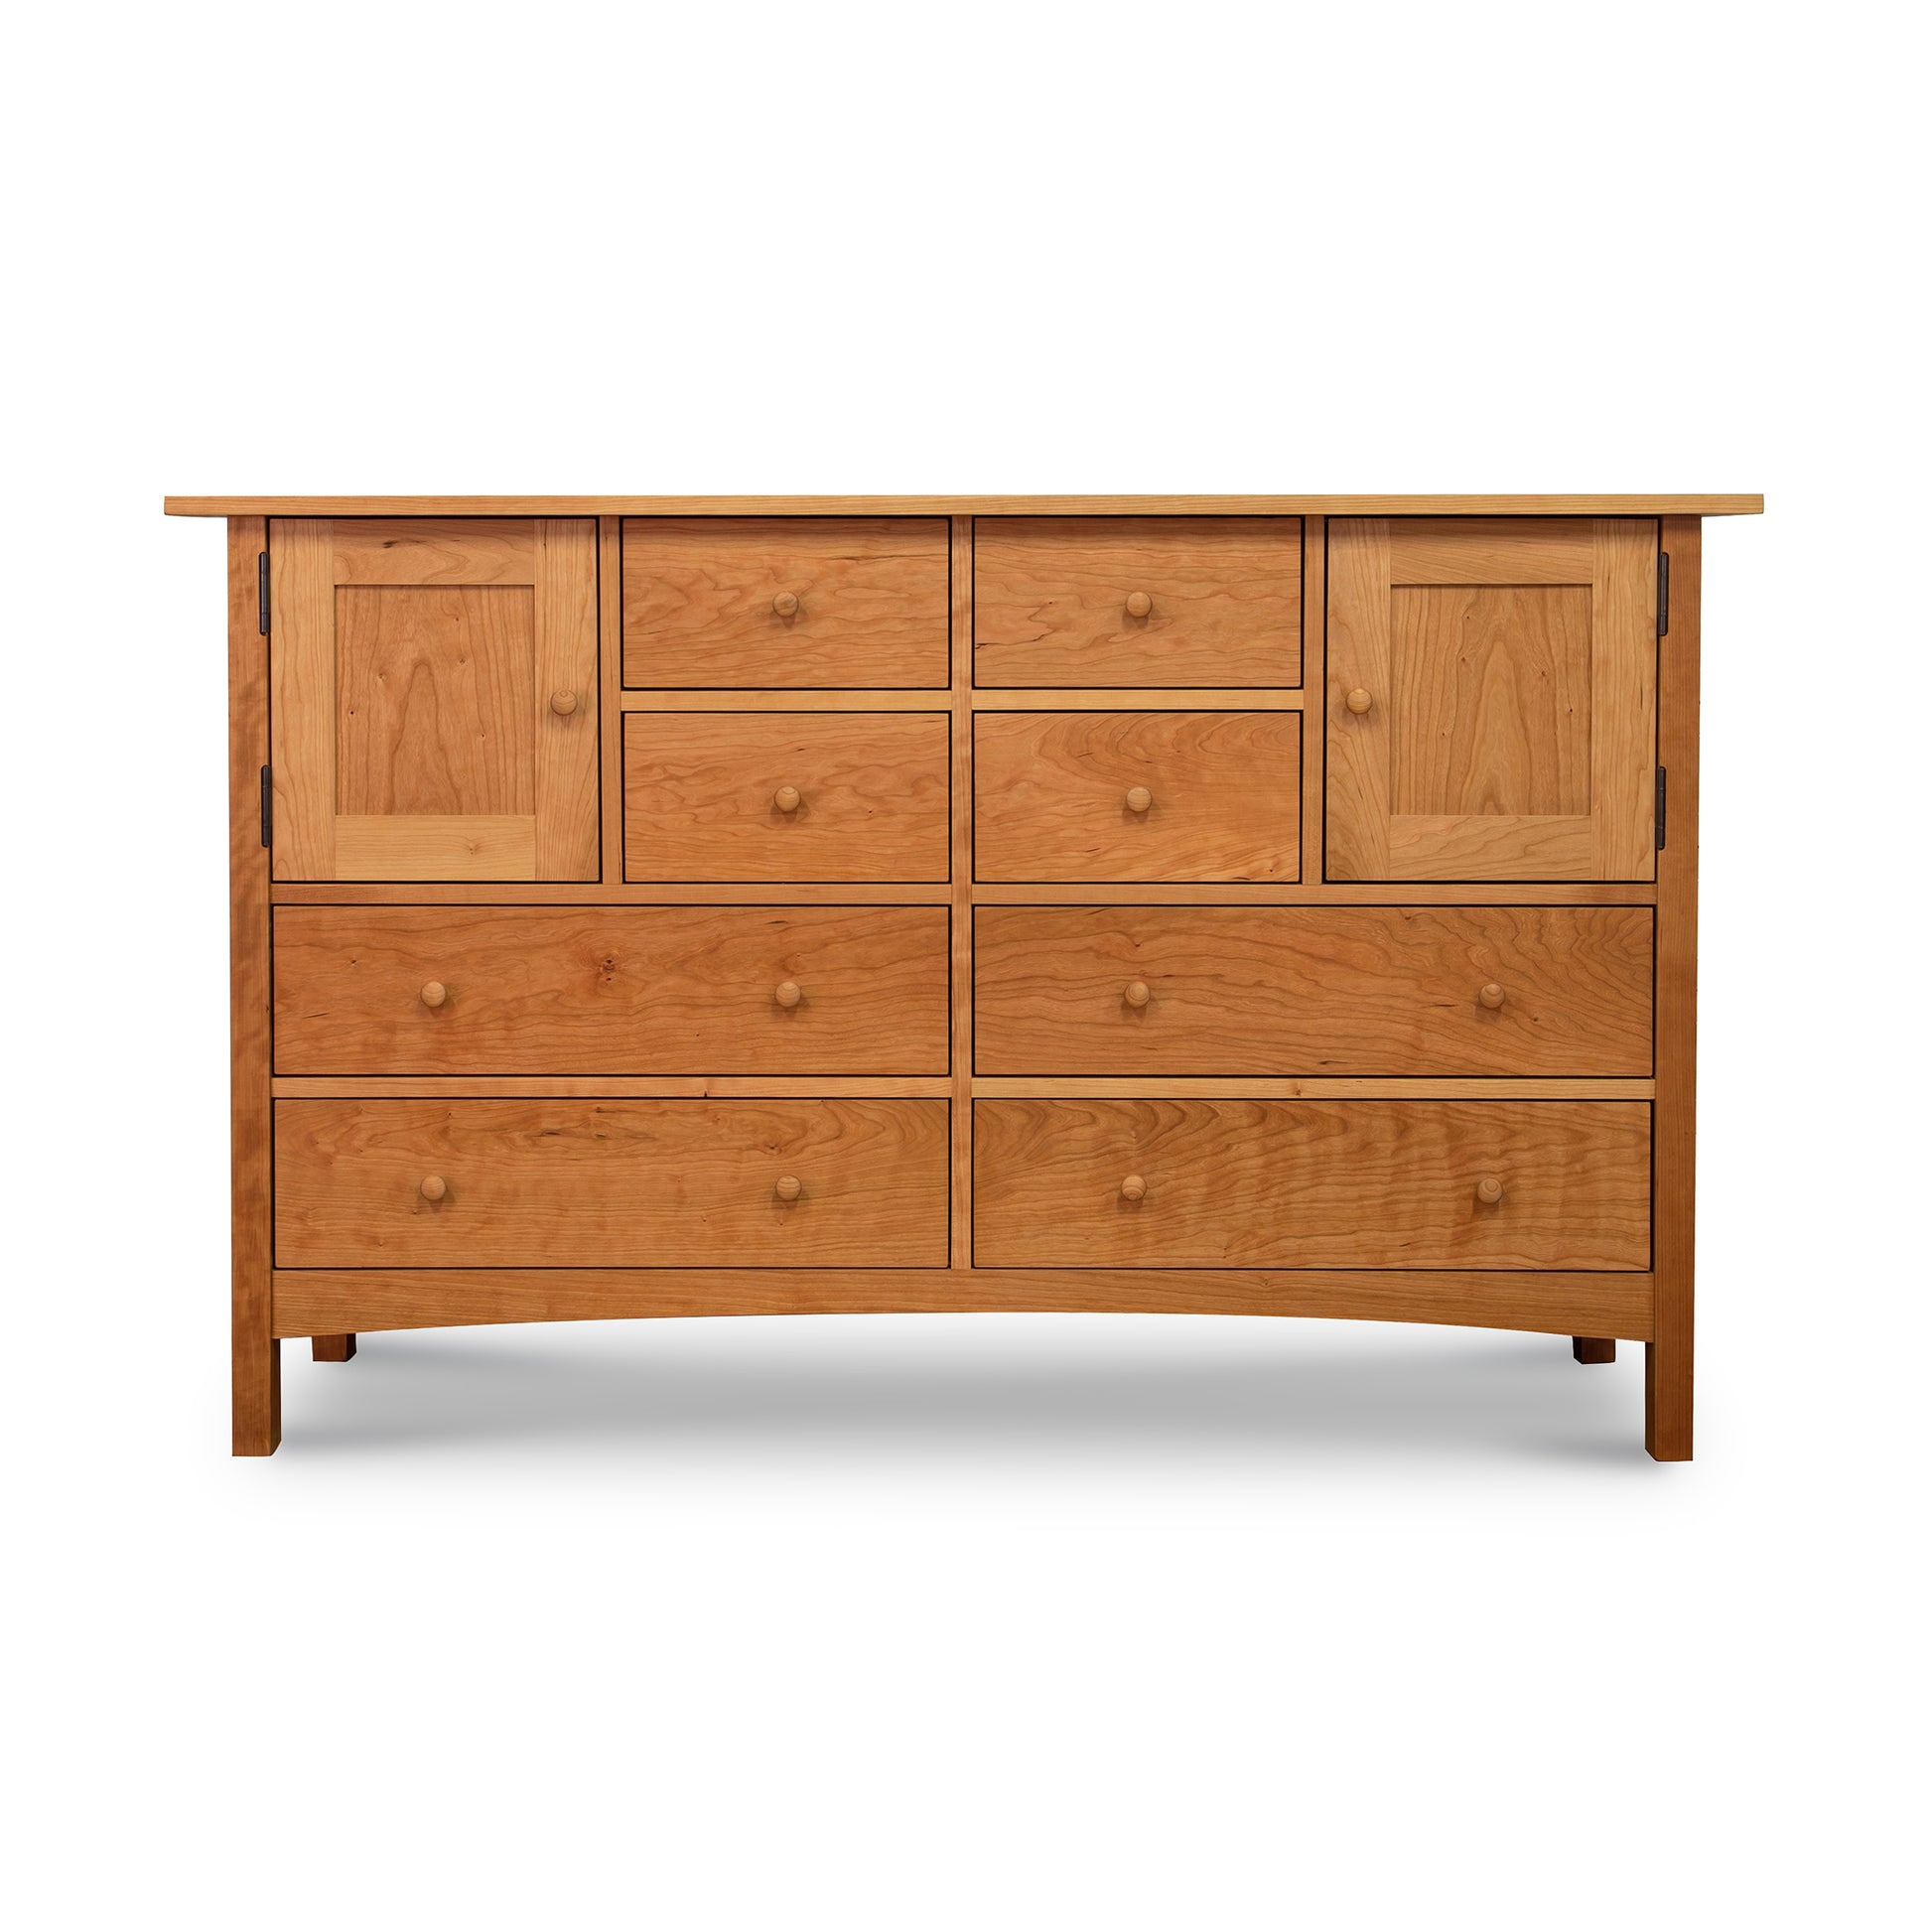 A Vermont Furniture Designs Burlington Shaker 8-Drawer 2-Door Dresser.